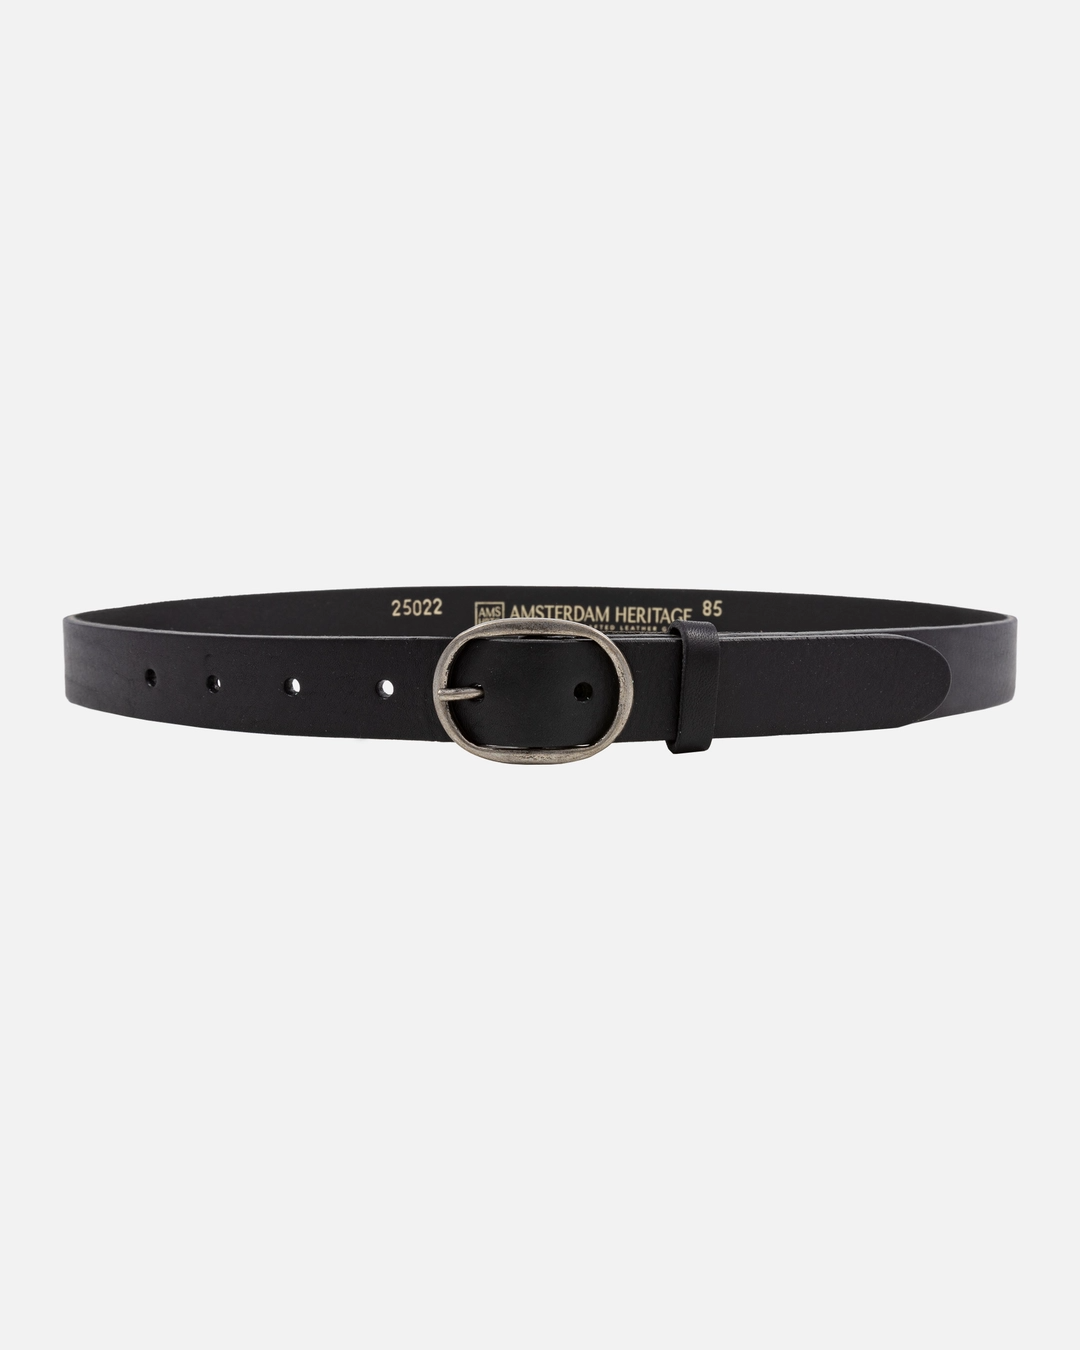 Amsterdam Belts Yade Belt - Black Accessories - Other Accessories - Belts by Amsterdam Belts | Grace the Boutique